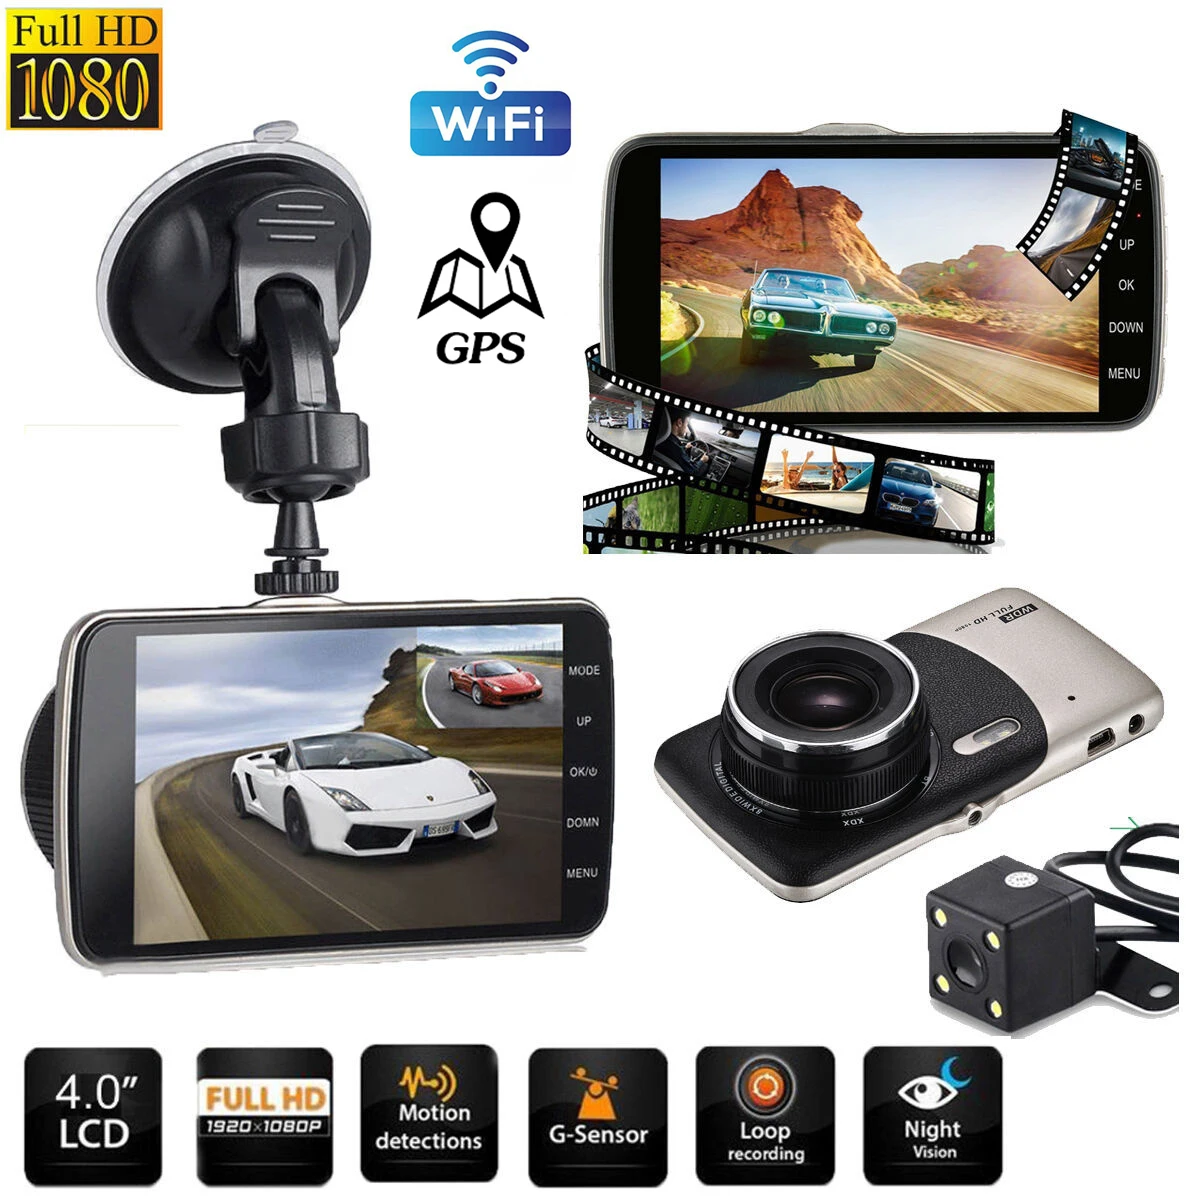 Car DVR WiFi 4.0" Full HD 1080P Rear View Dash Cam Vehicle Camera Video Recorder Auto DVR Parking Monitor G-sensor GPS Tracker